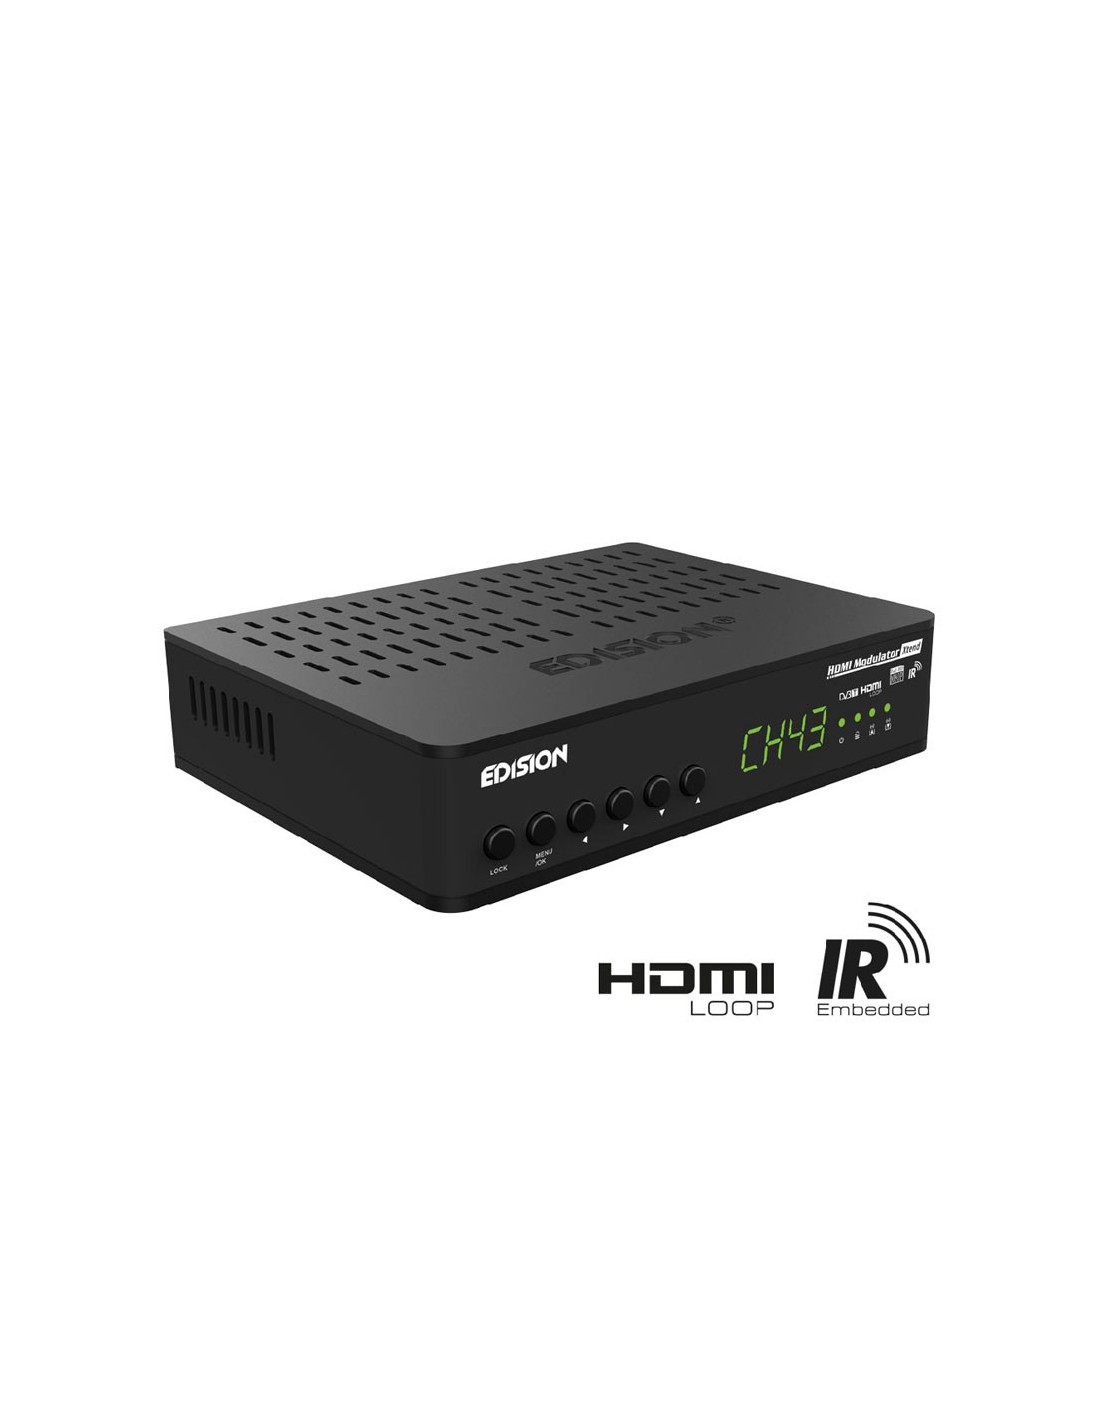 Compra Modulador Digital Edision Mini - HDMI FULL HD con precios increibles.